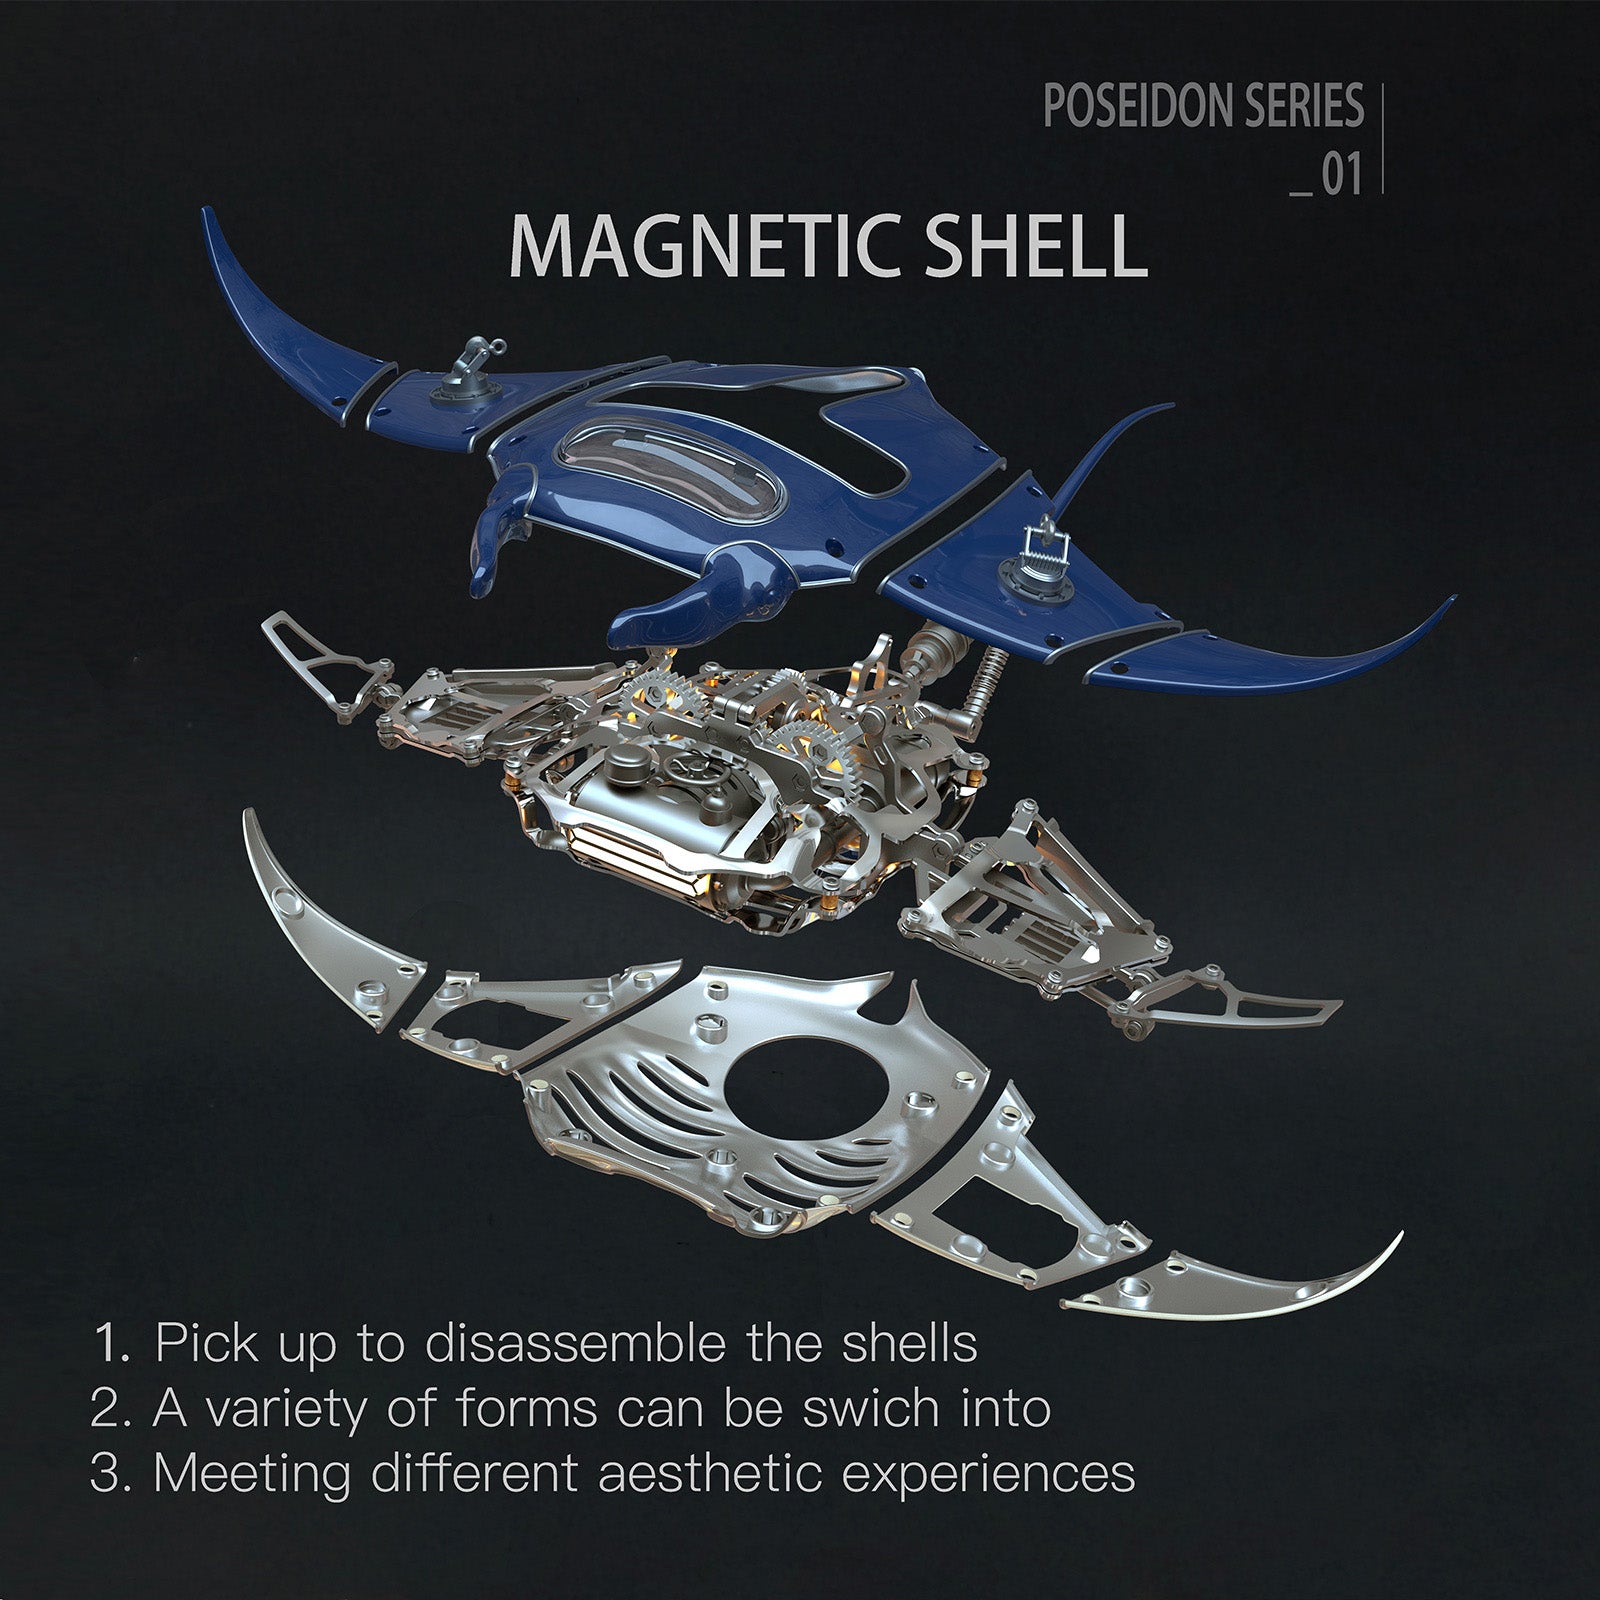 Steampunk Mobula Manta Ray Mechanical 3D Metal Model Building Kits 200+PCS - stirlingkit